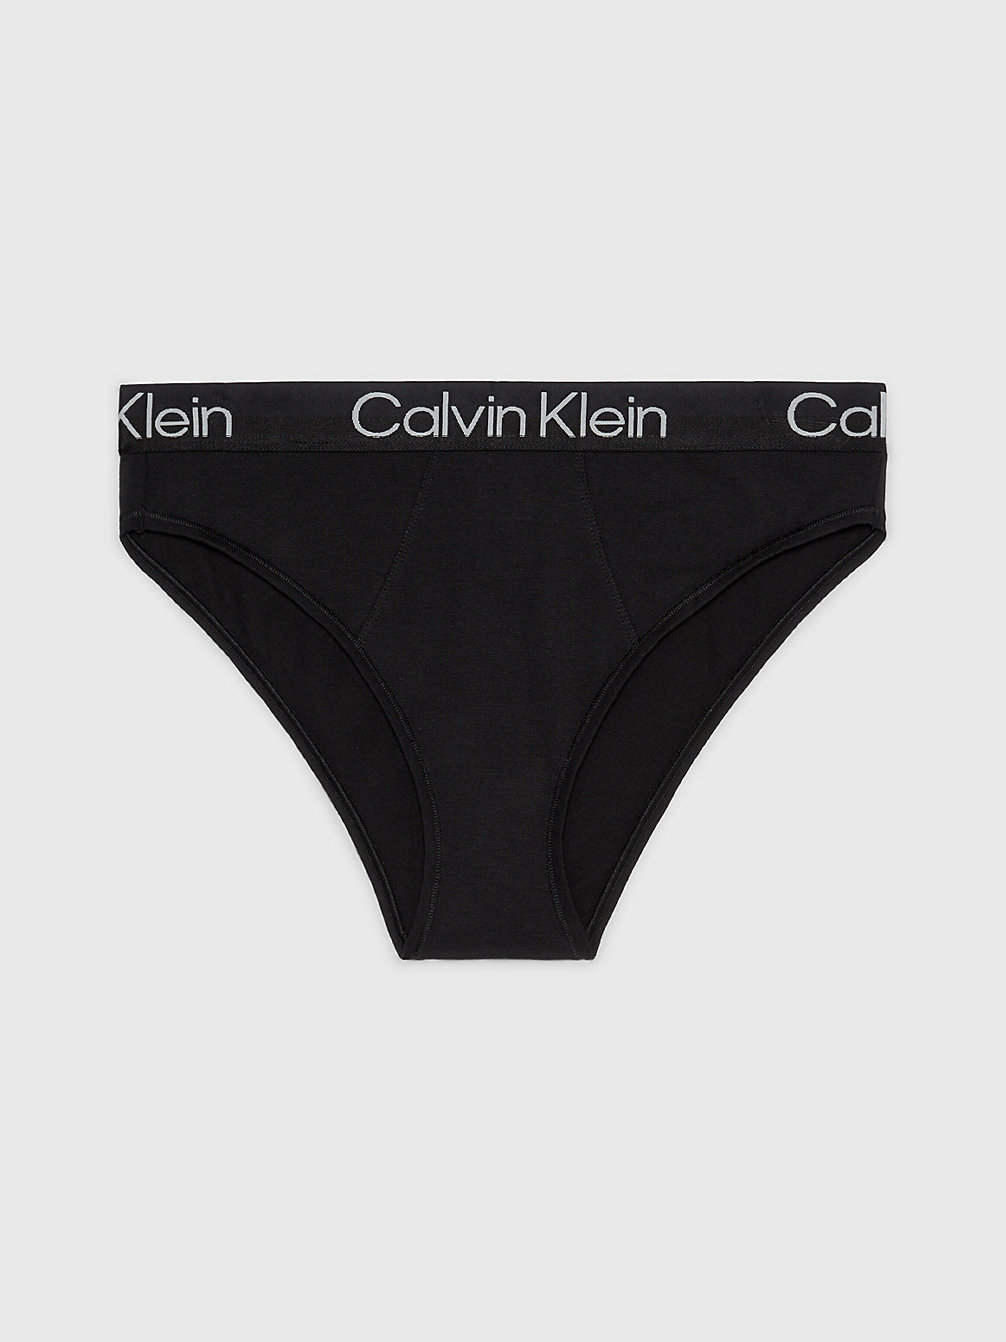 BLACK High Leg Brazilian Briefs - Modern Structure undefined women Calvin Klein